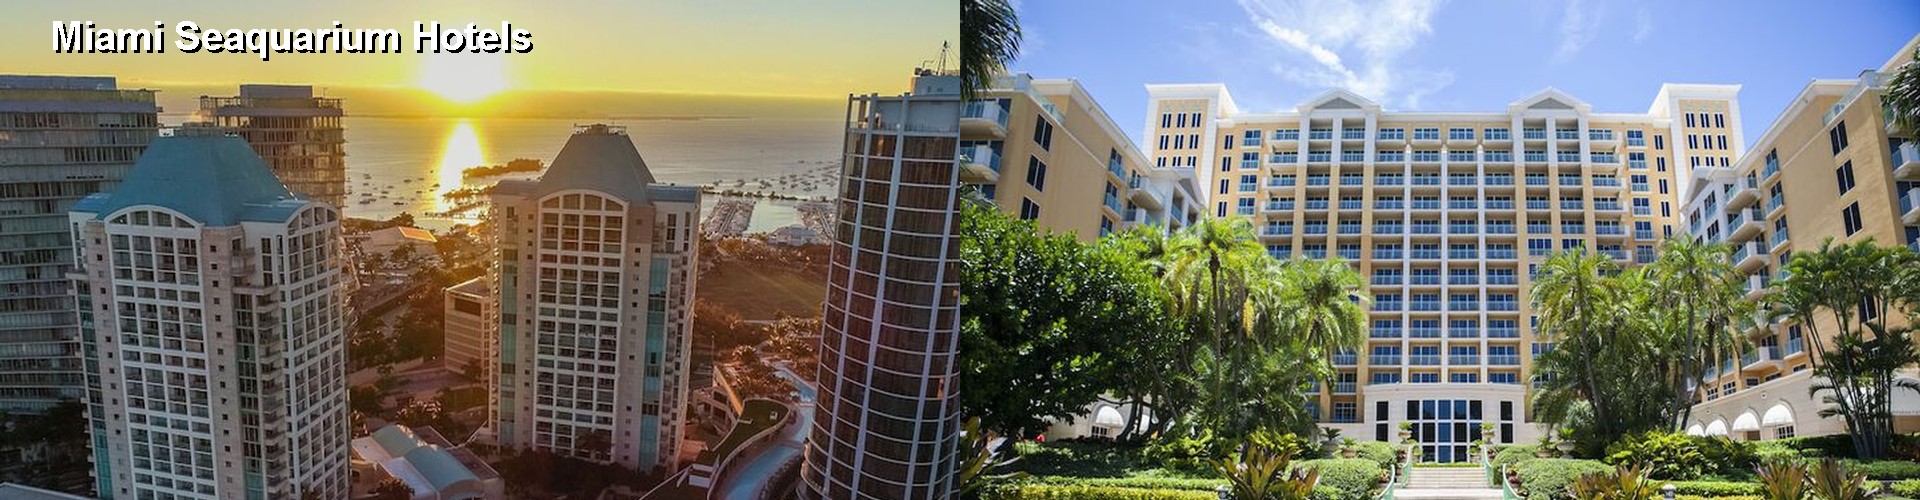 5 Best Hotels near Miami Seaquarium